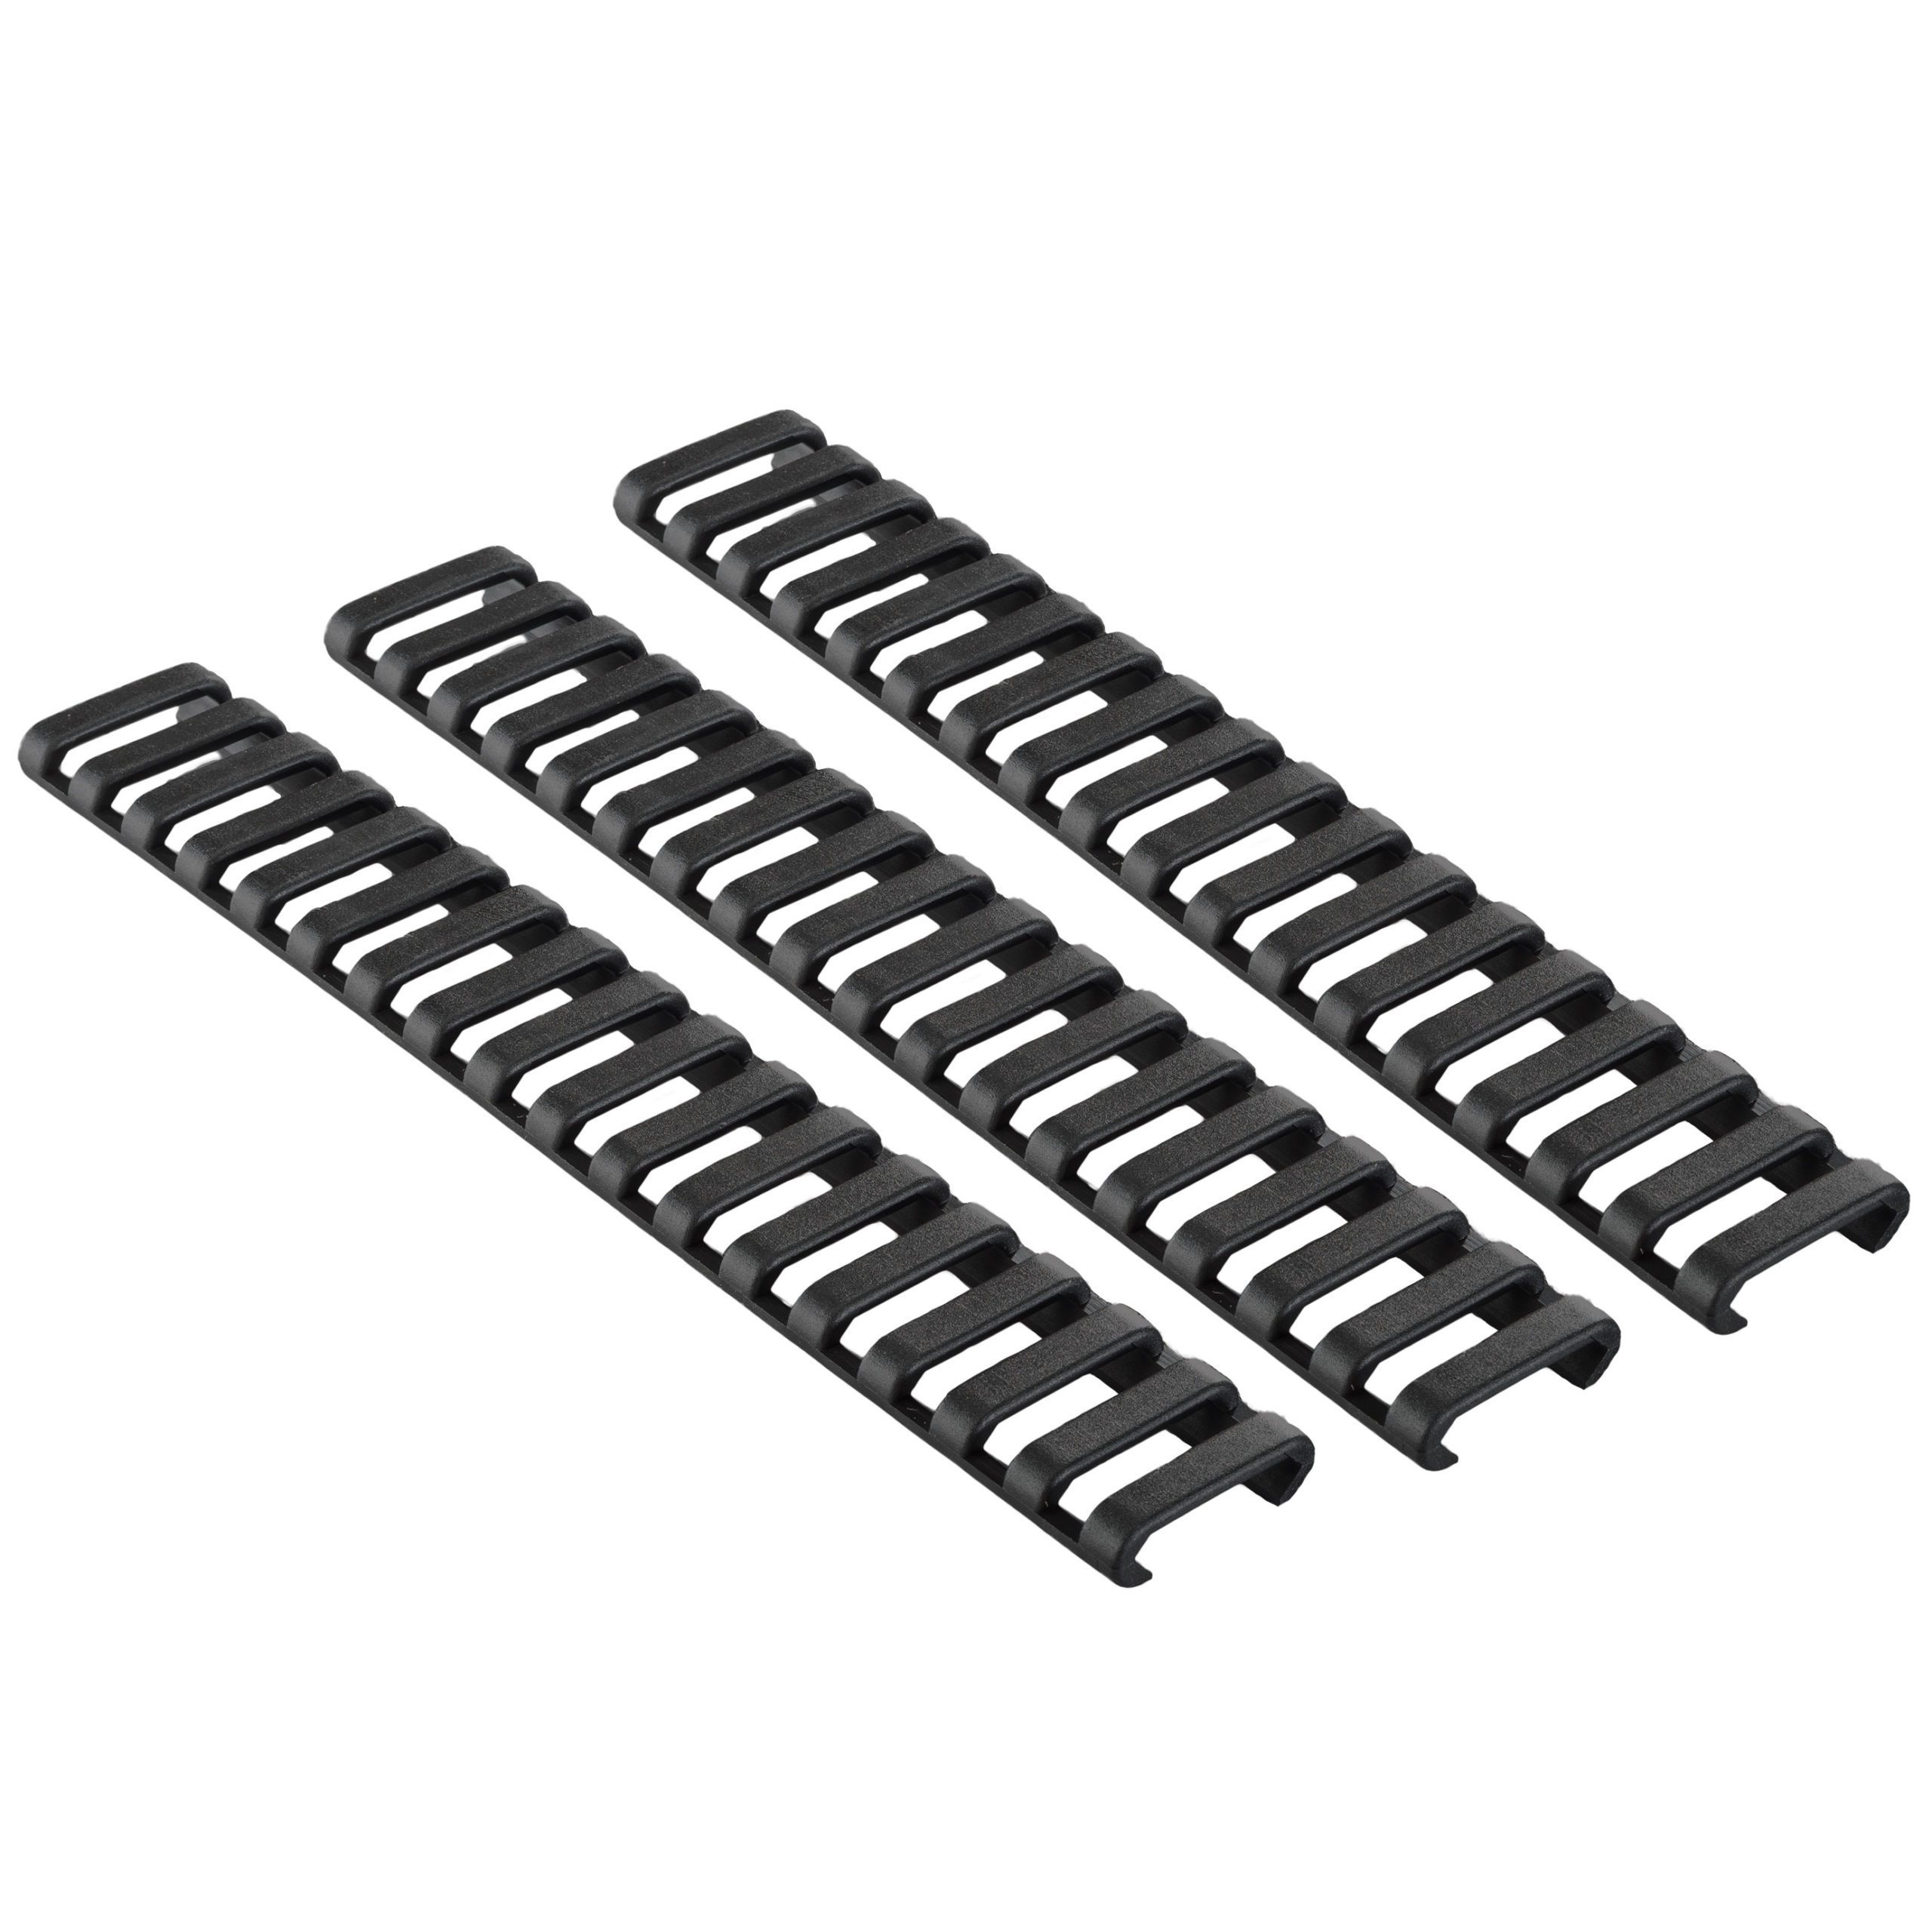 Magpul Ladder Rail Panel Cover Picatinny Rail 18 Slots Black Made in USA Black 